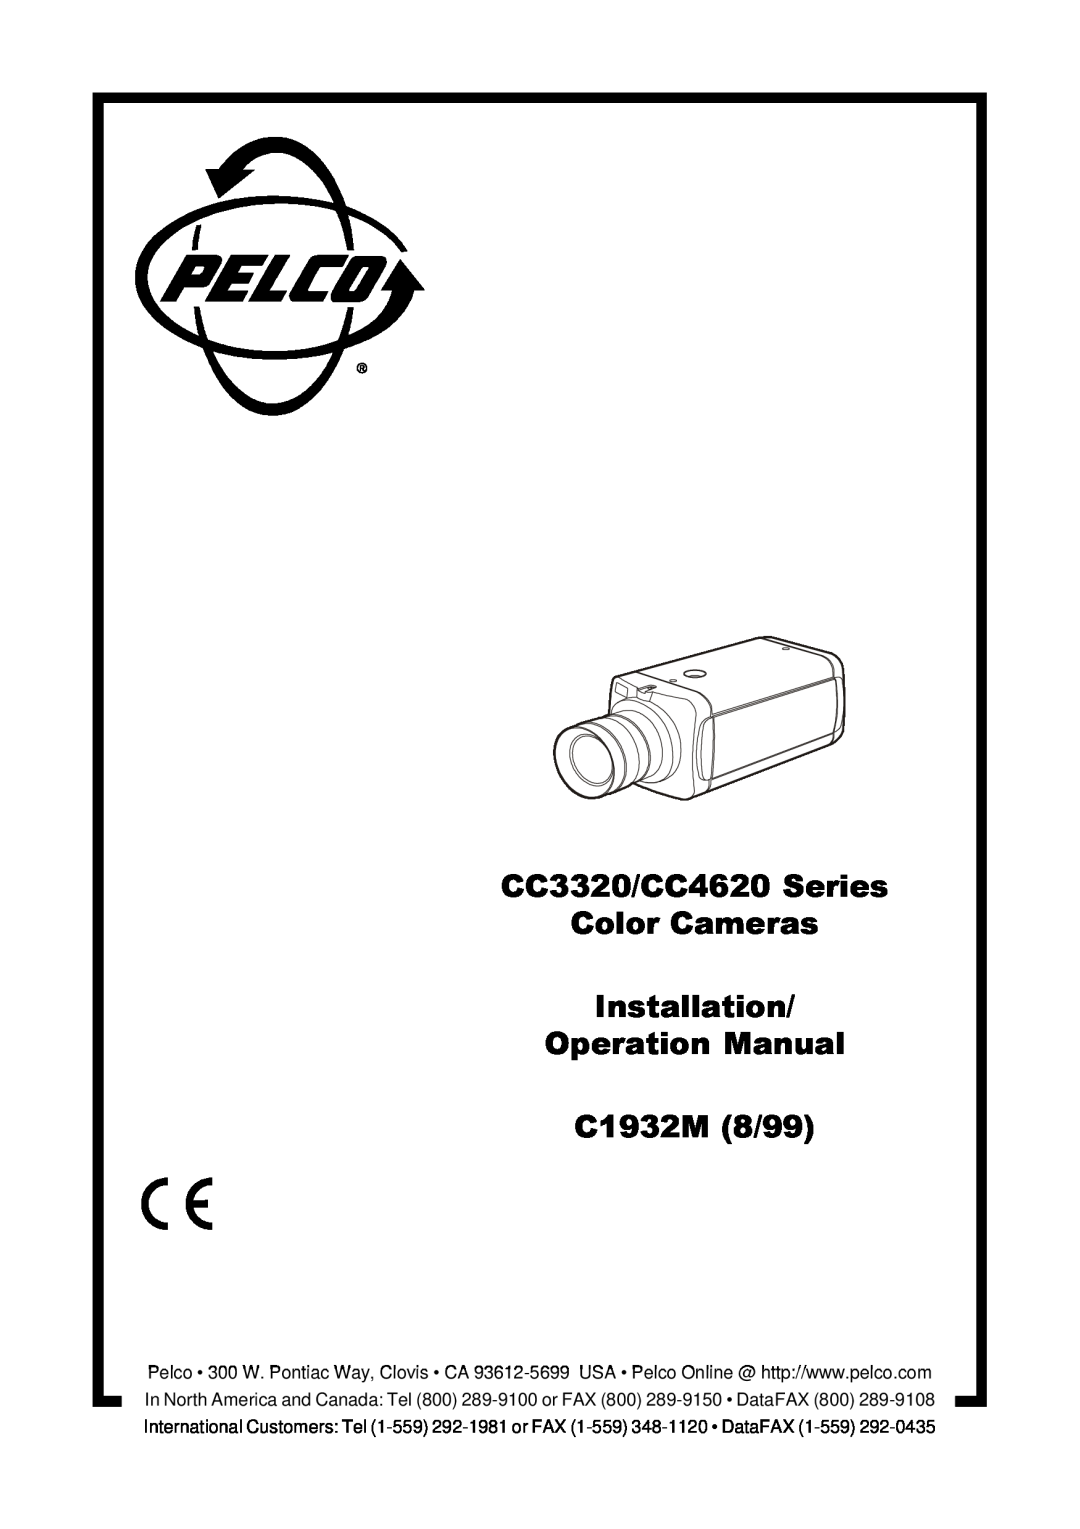 Pelco operation manual CC3320/CC4620 Series, Color Cameras, Installation, C1932M 8/99 